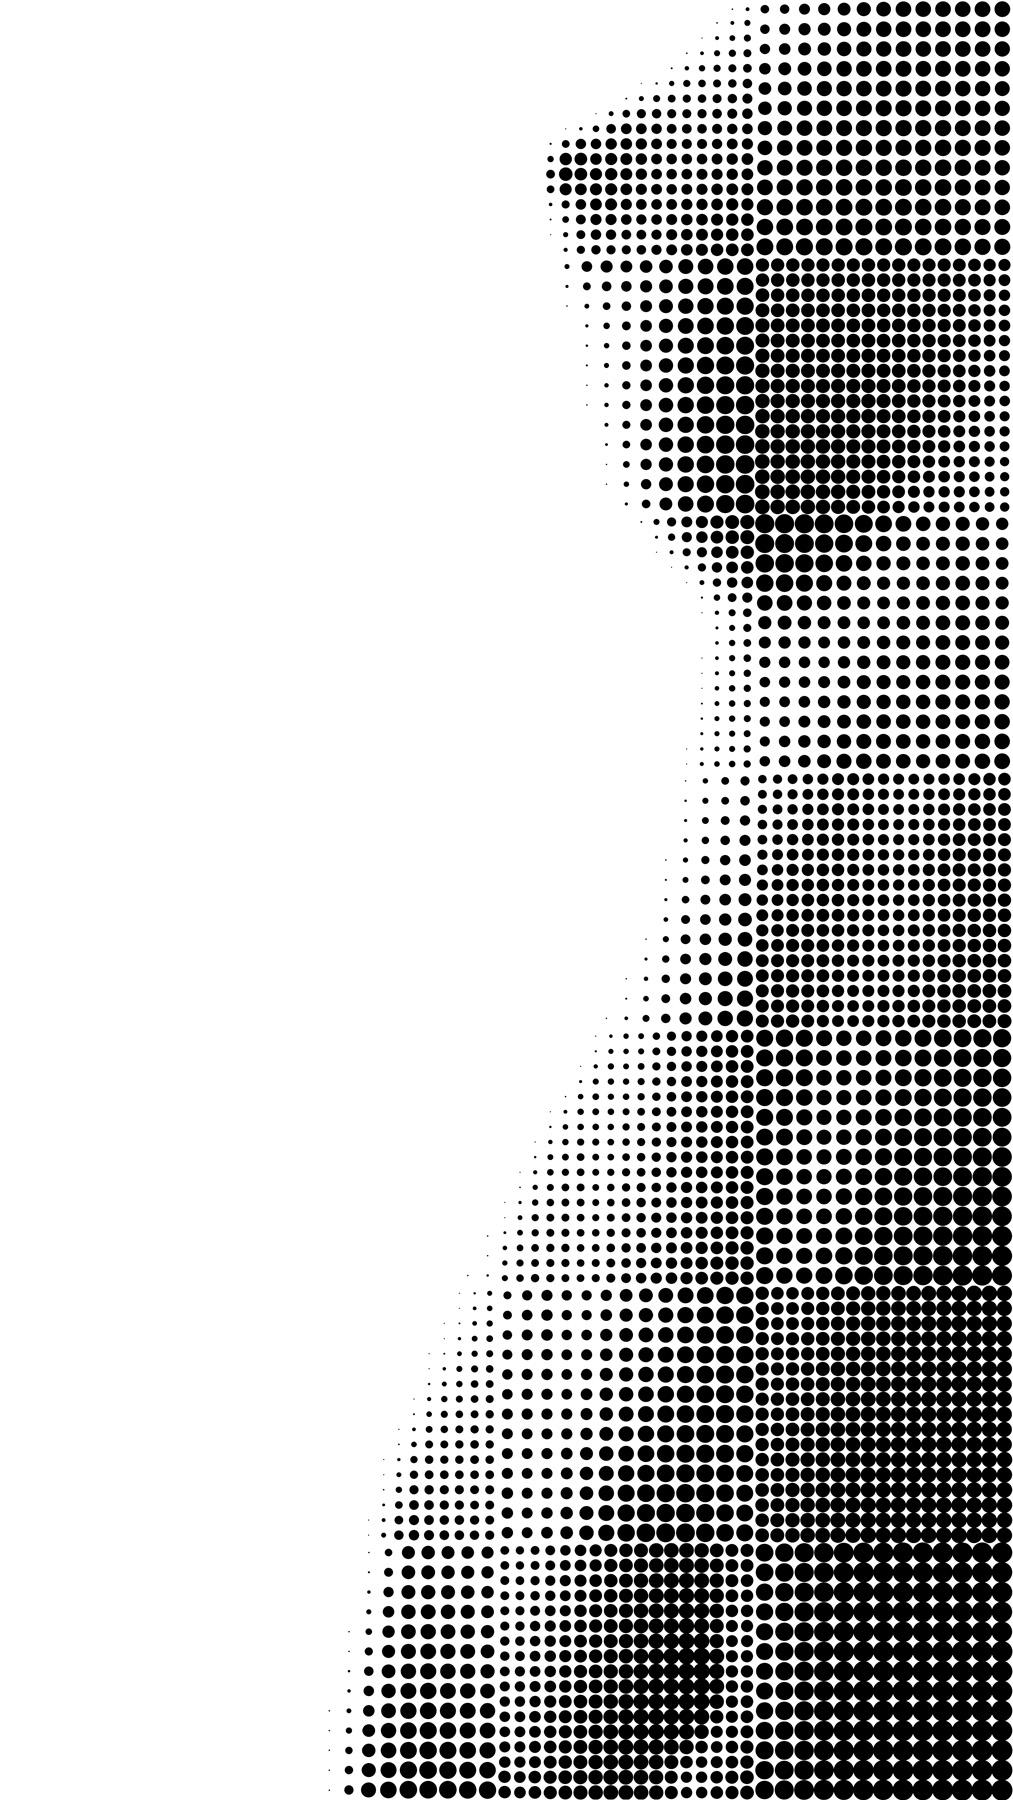 Stephen Bezas Black and White Photograph - Nude "Perky"